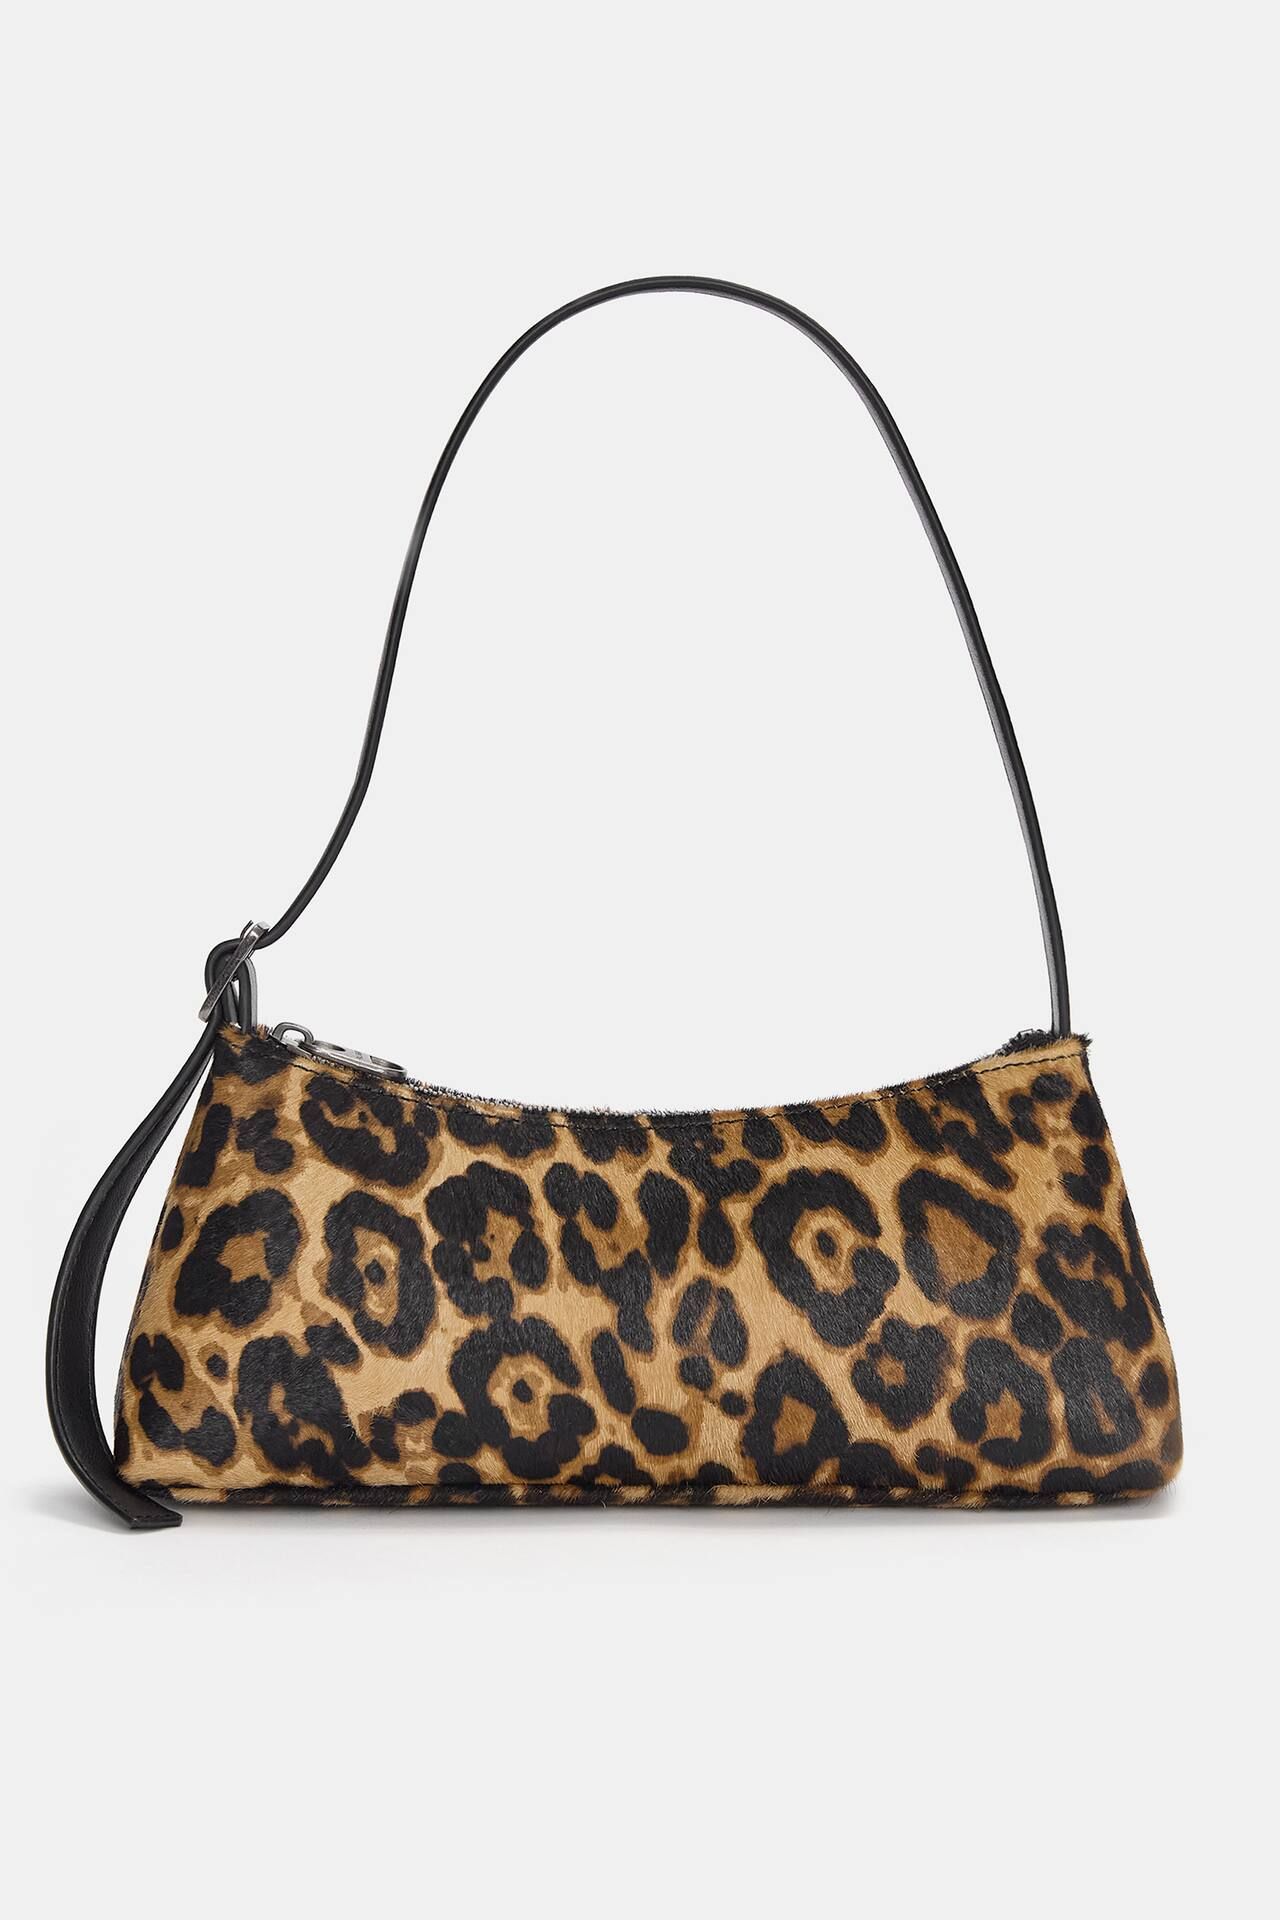 Animal print shoulder bag with strap | PULL and BEAR UK